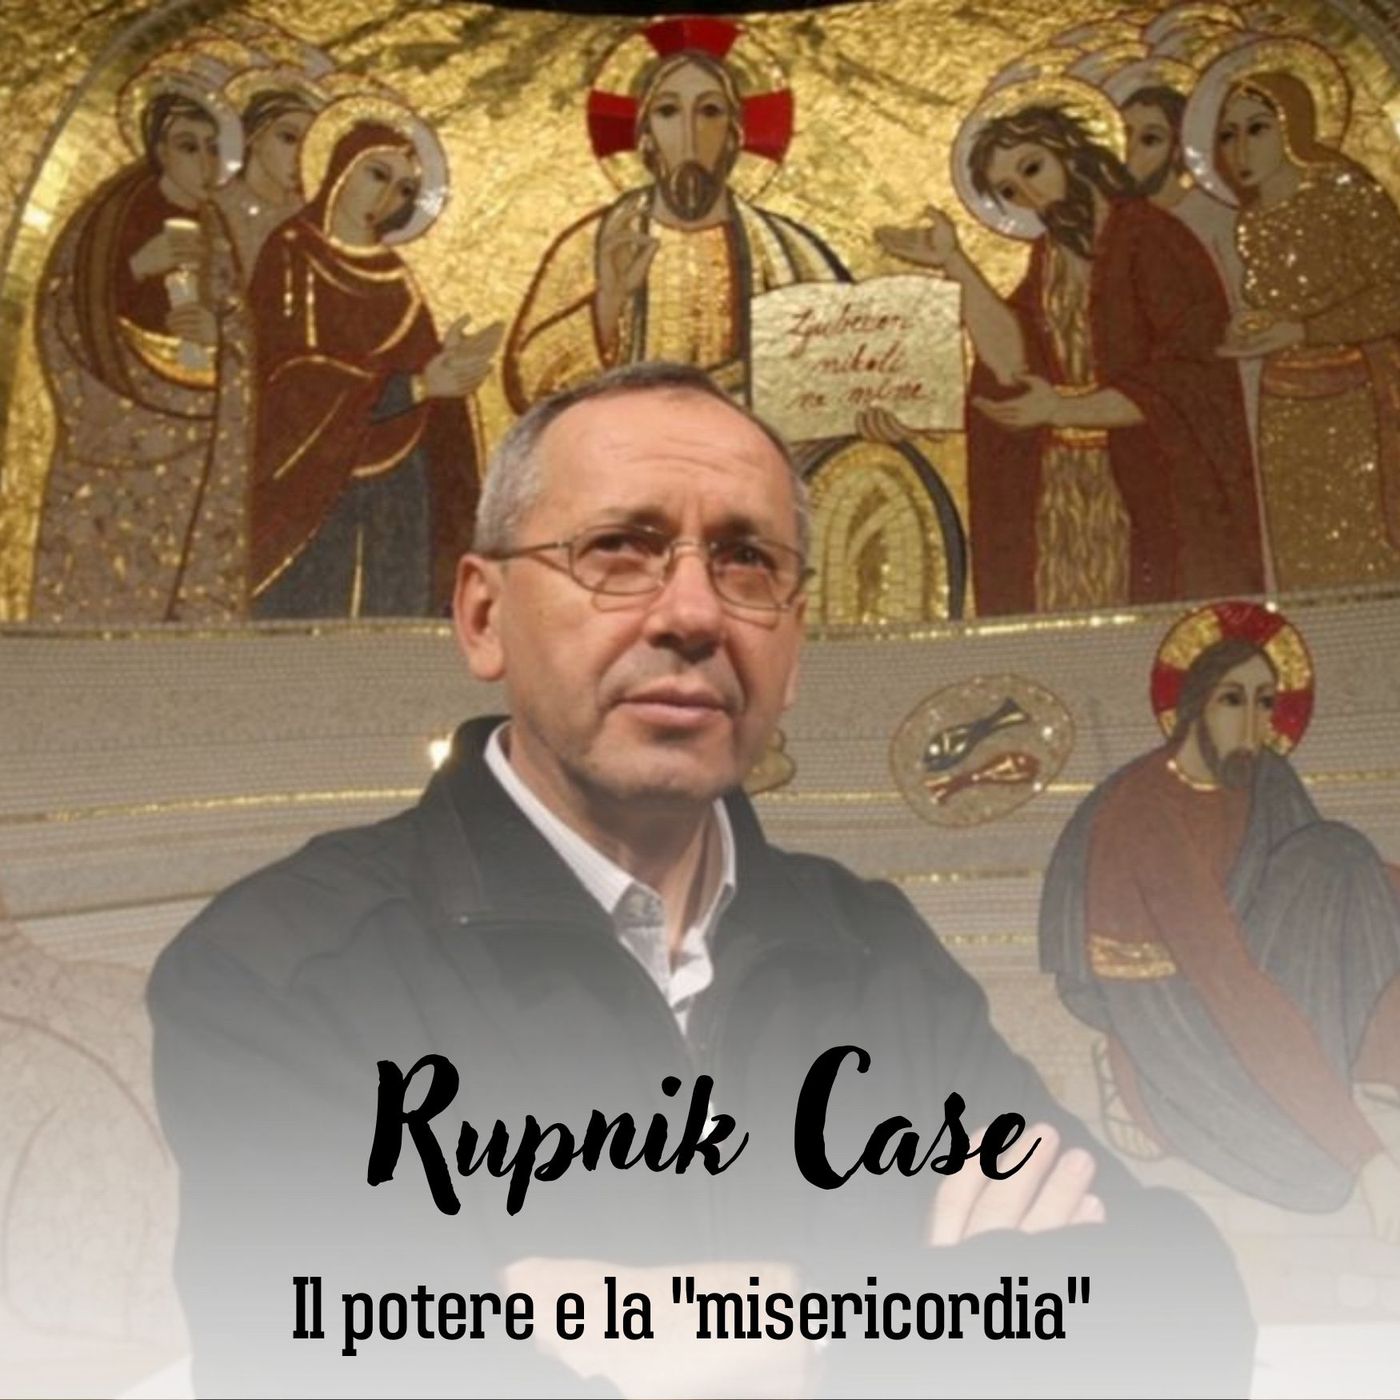 The Rupnik Case